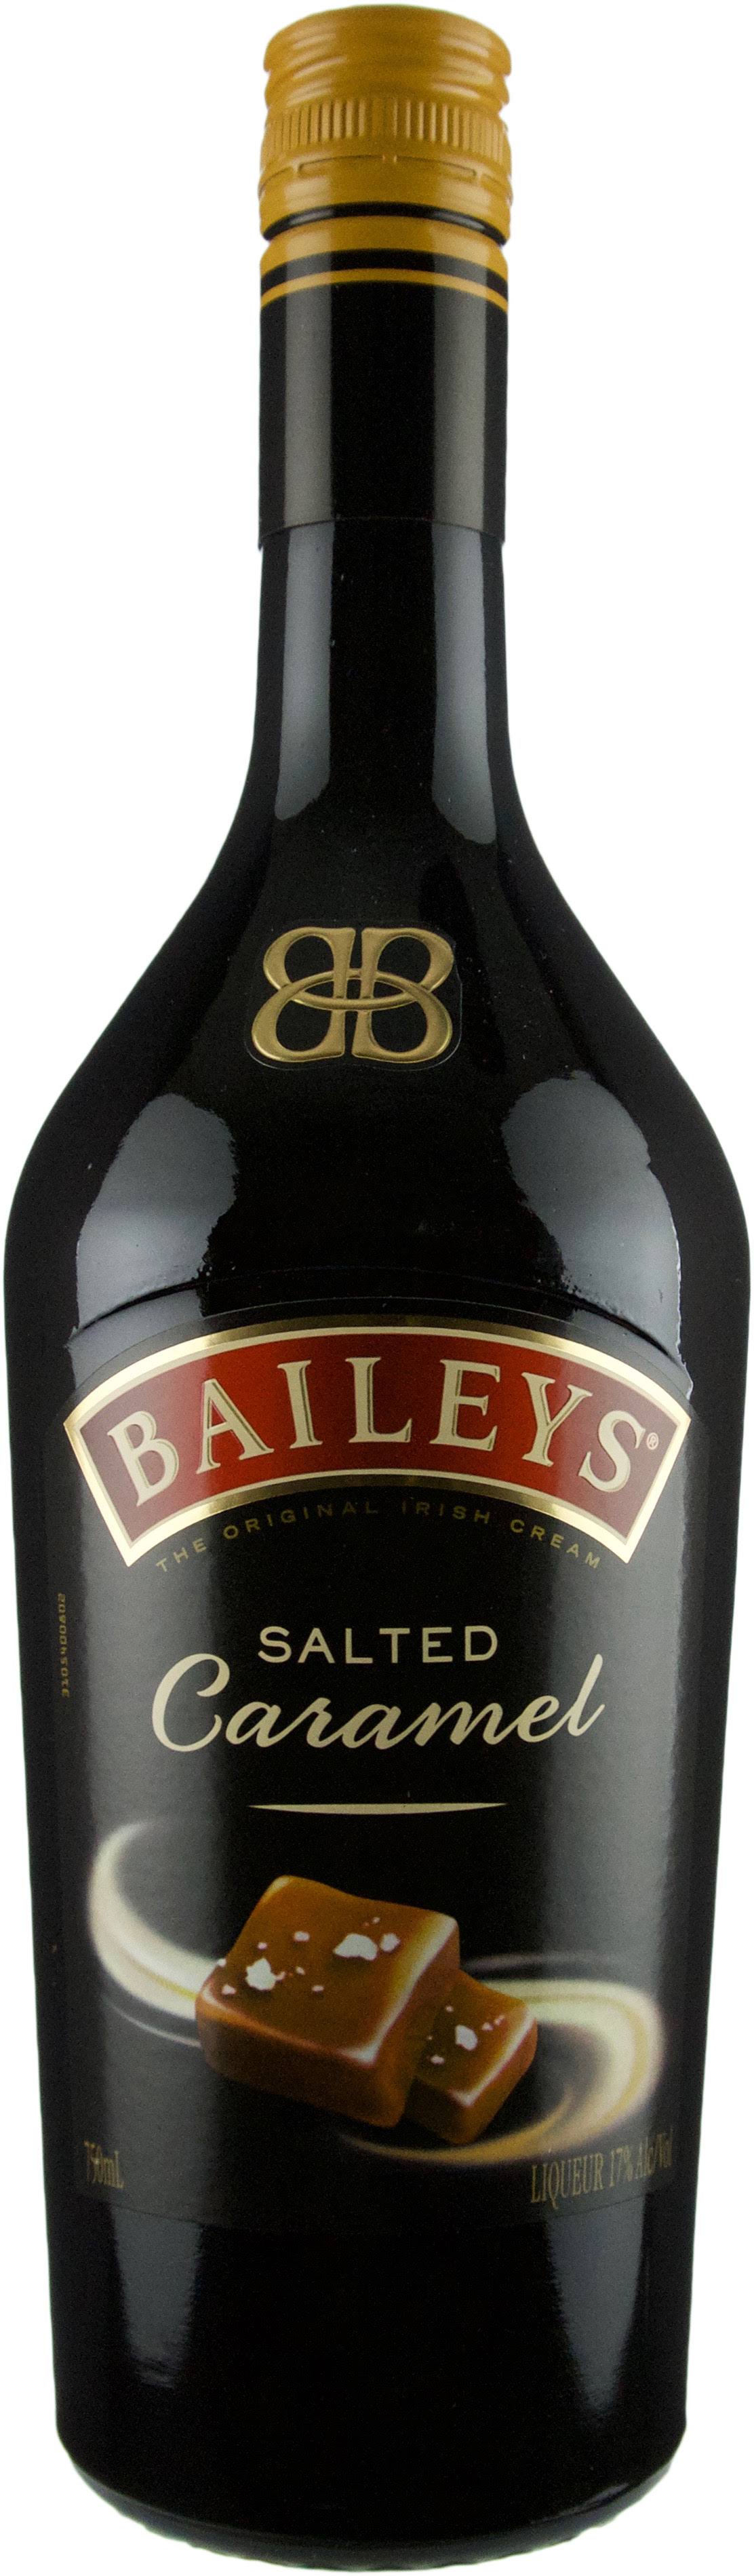 Baileys Irish Cream Liqueur With Caramel - 750ml